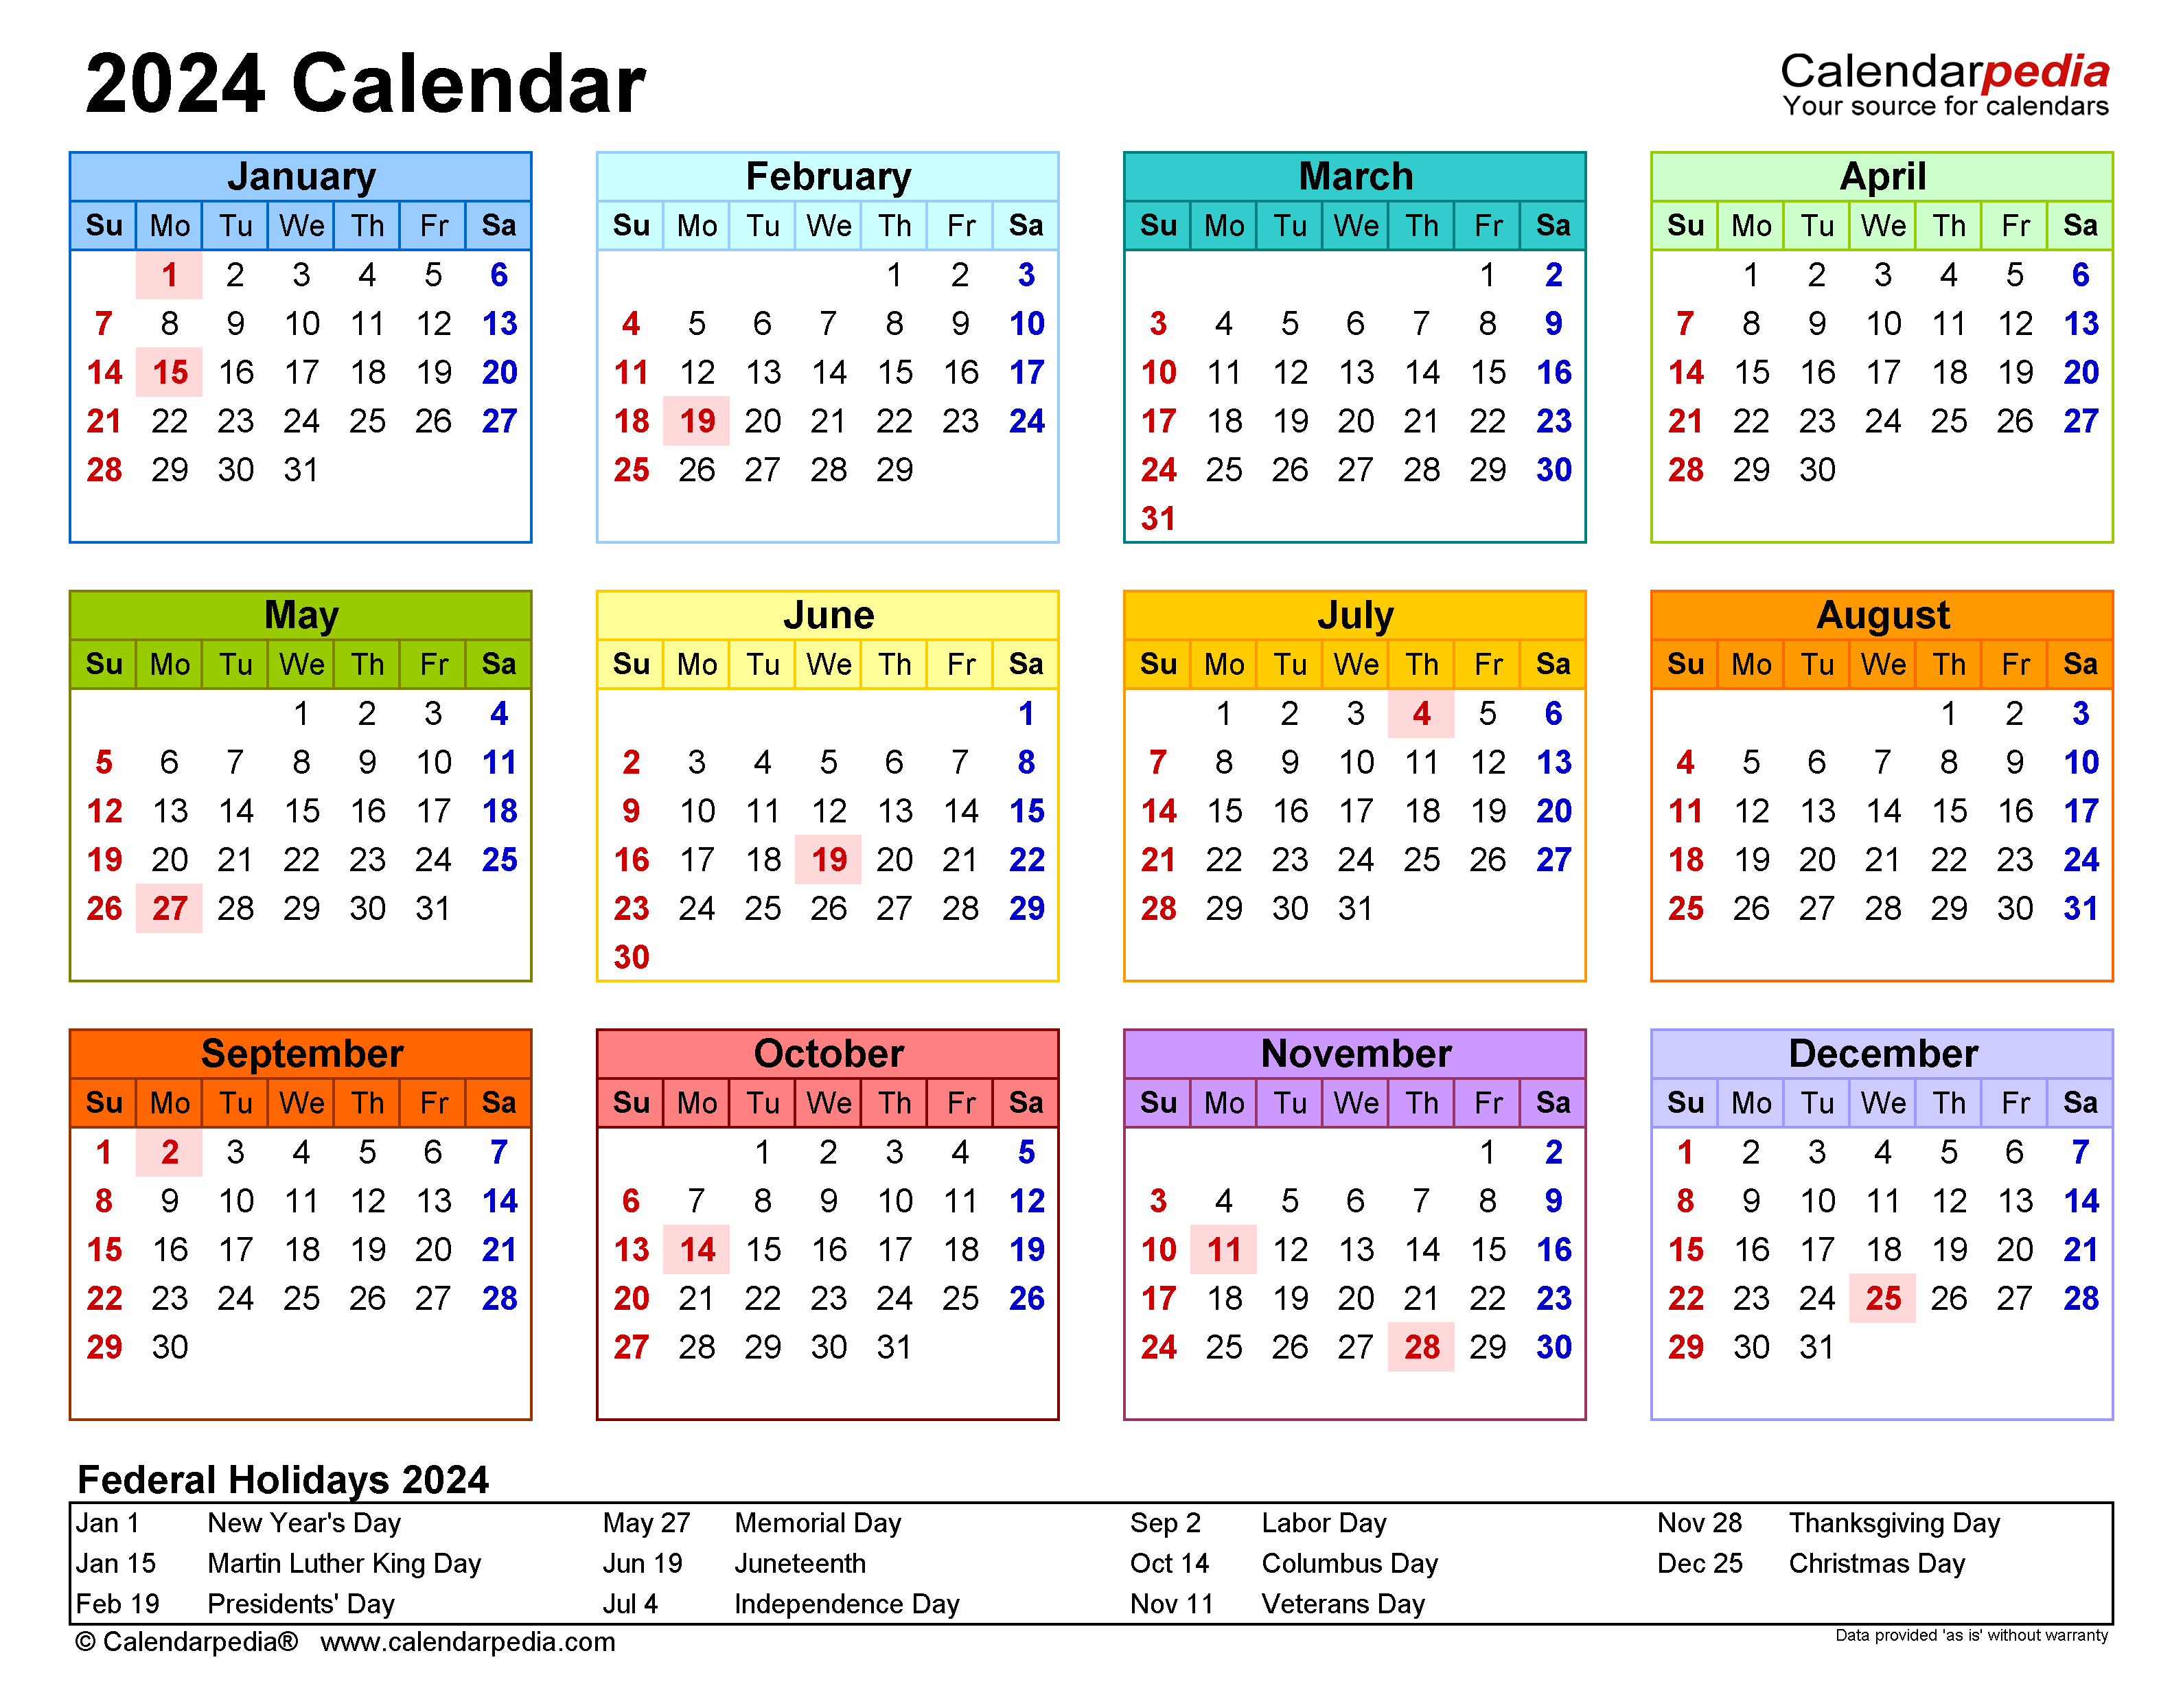 2024 Calendar - Free Printable Excel Templates - Calendarpedia for 2024 Calendar Printable Excel